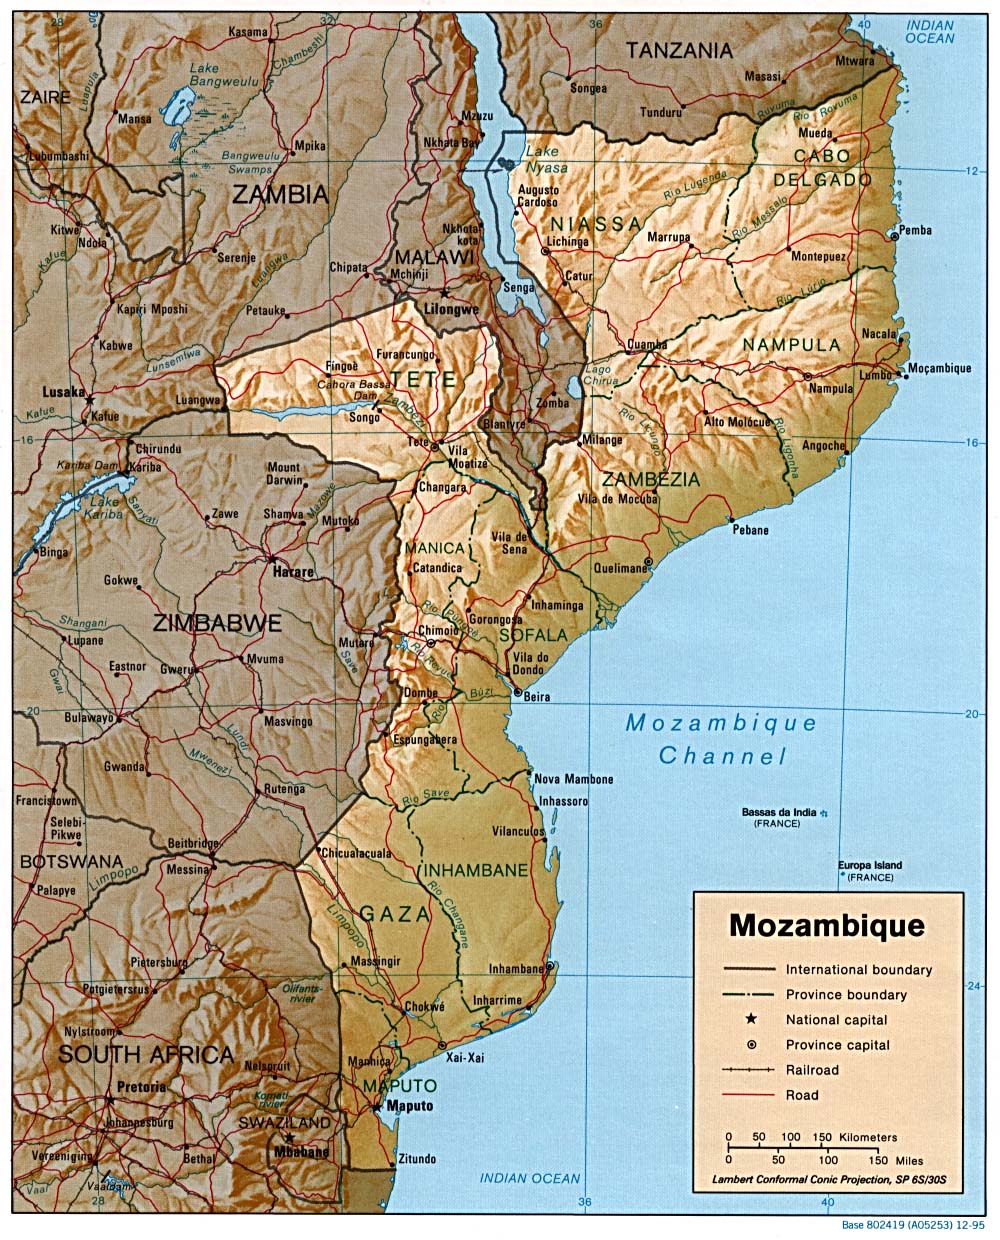 Mozambique_rel95.jpg